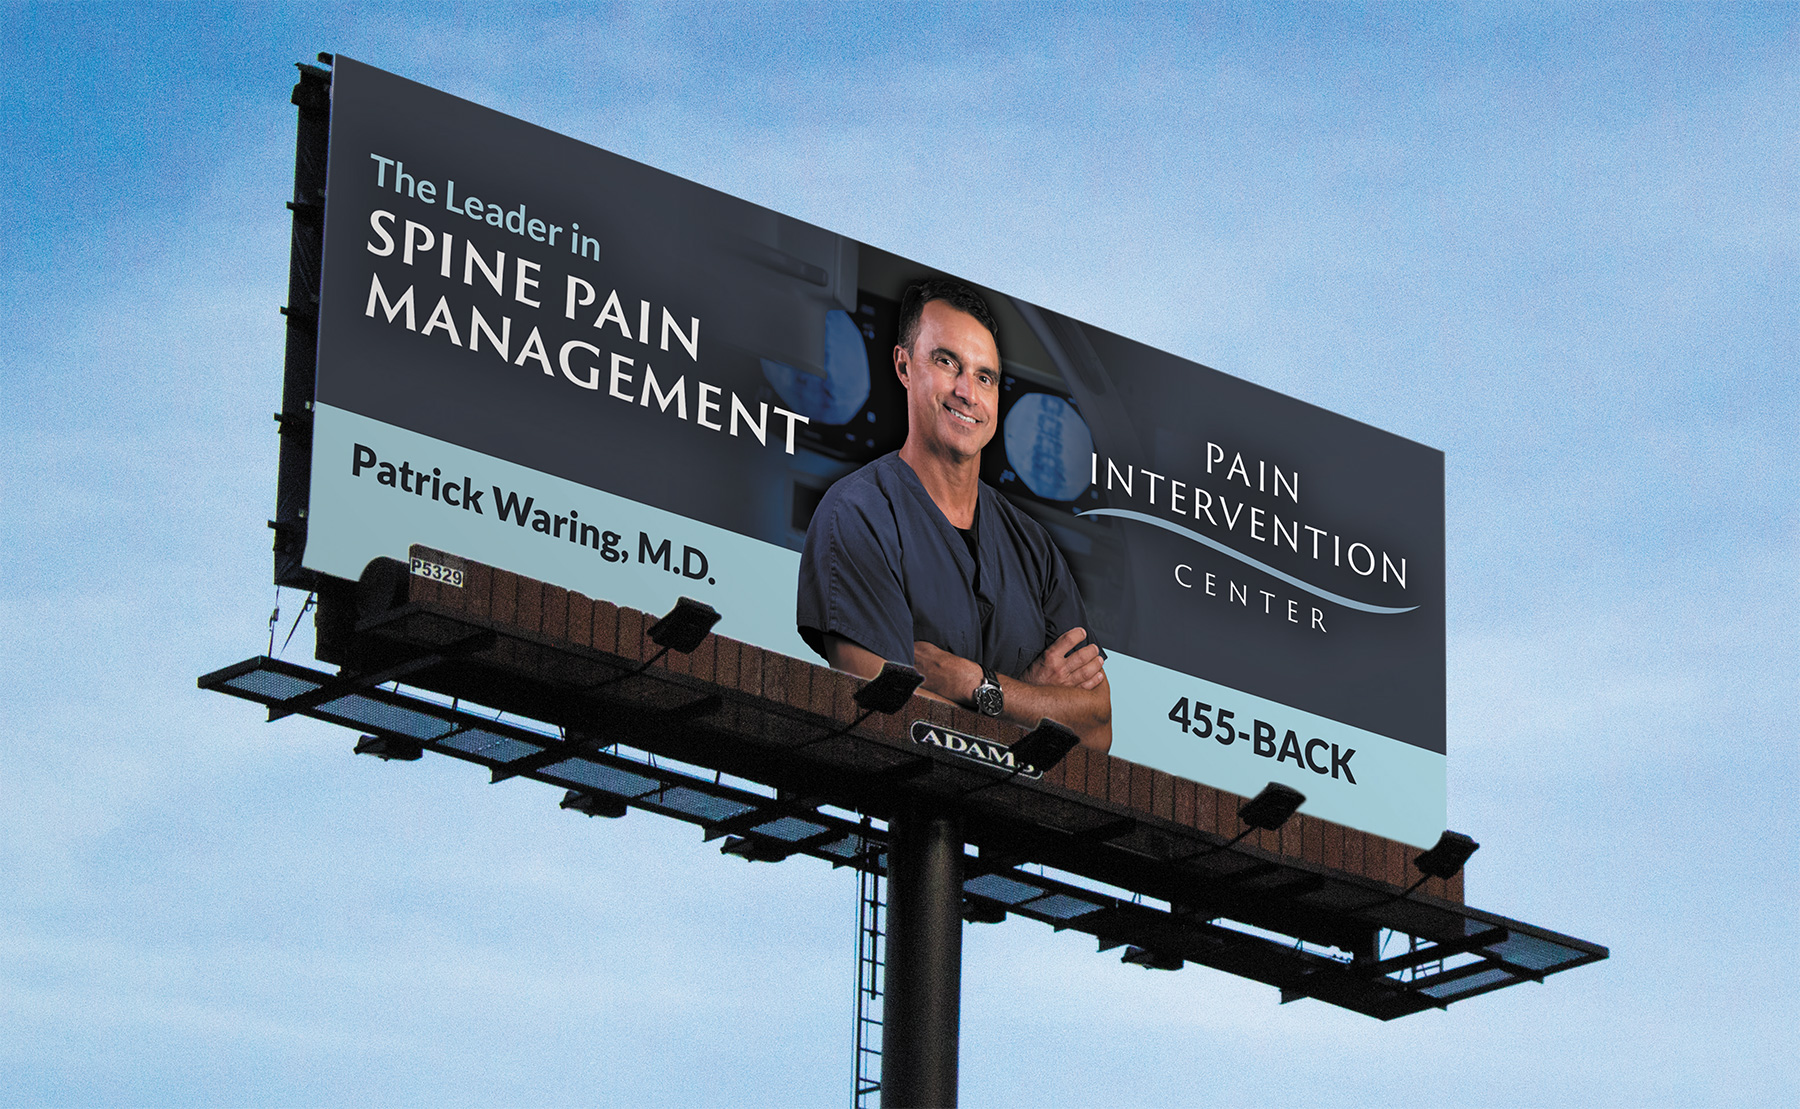 Pain Intervention Center Billboard - Deep Fried